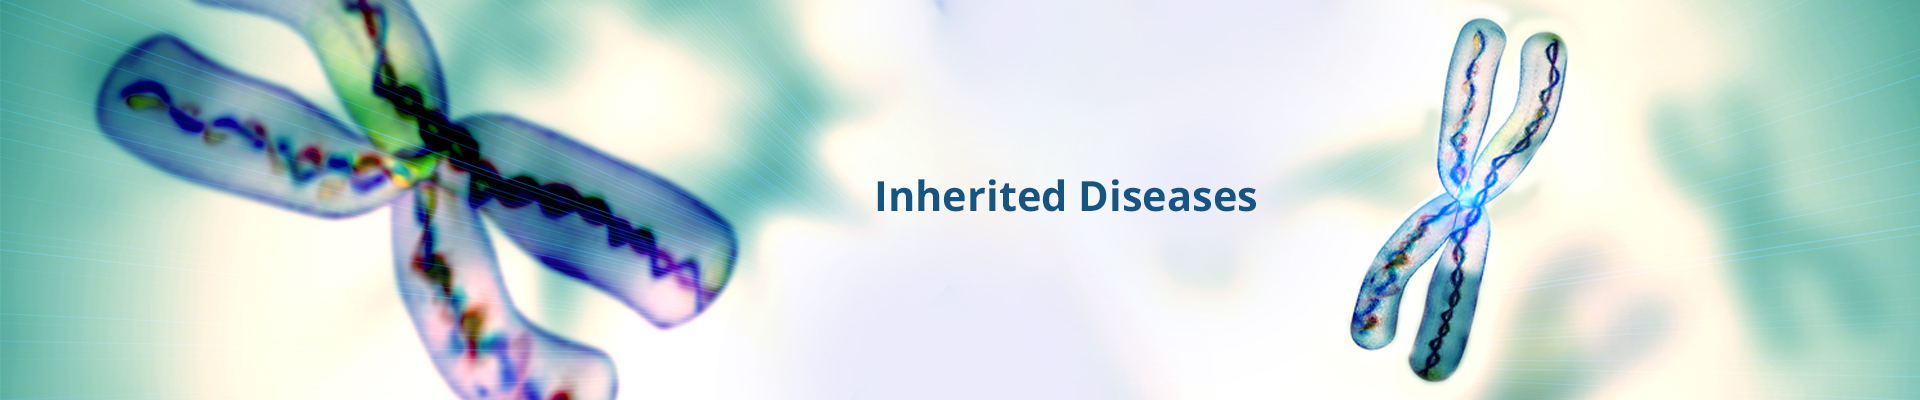 Inherited-Diseases-V2